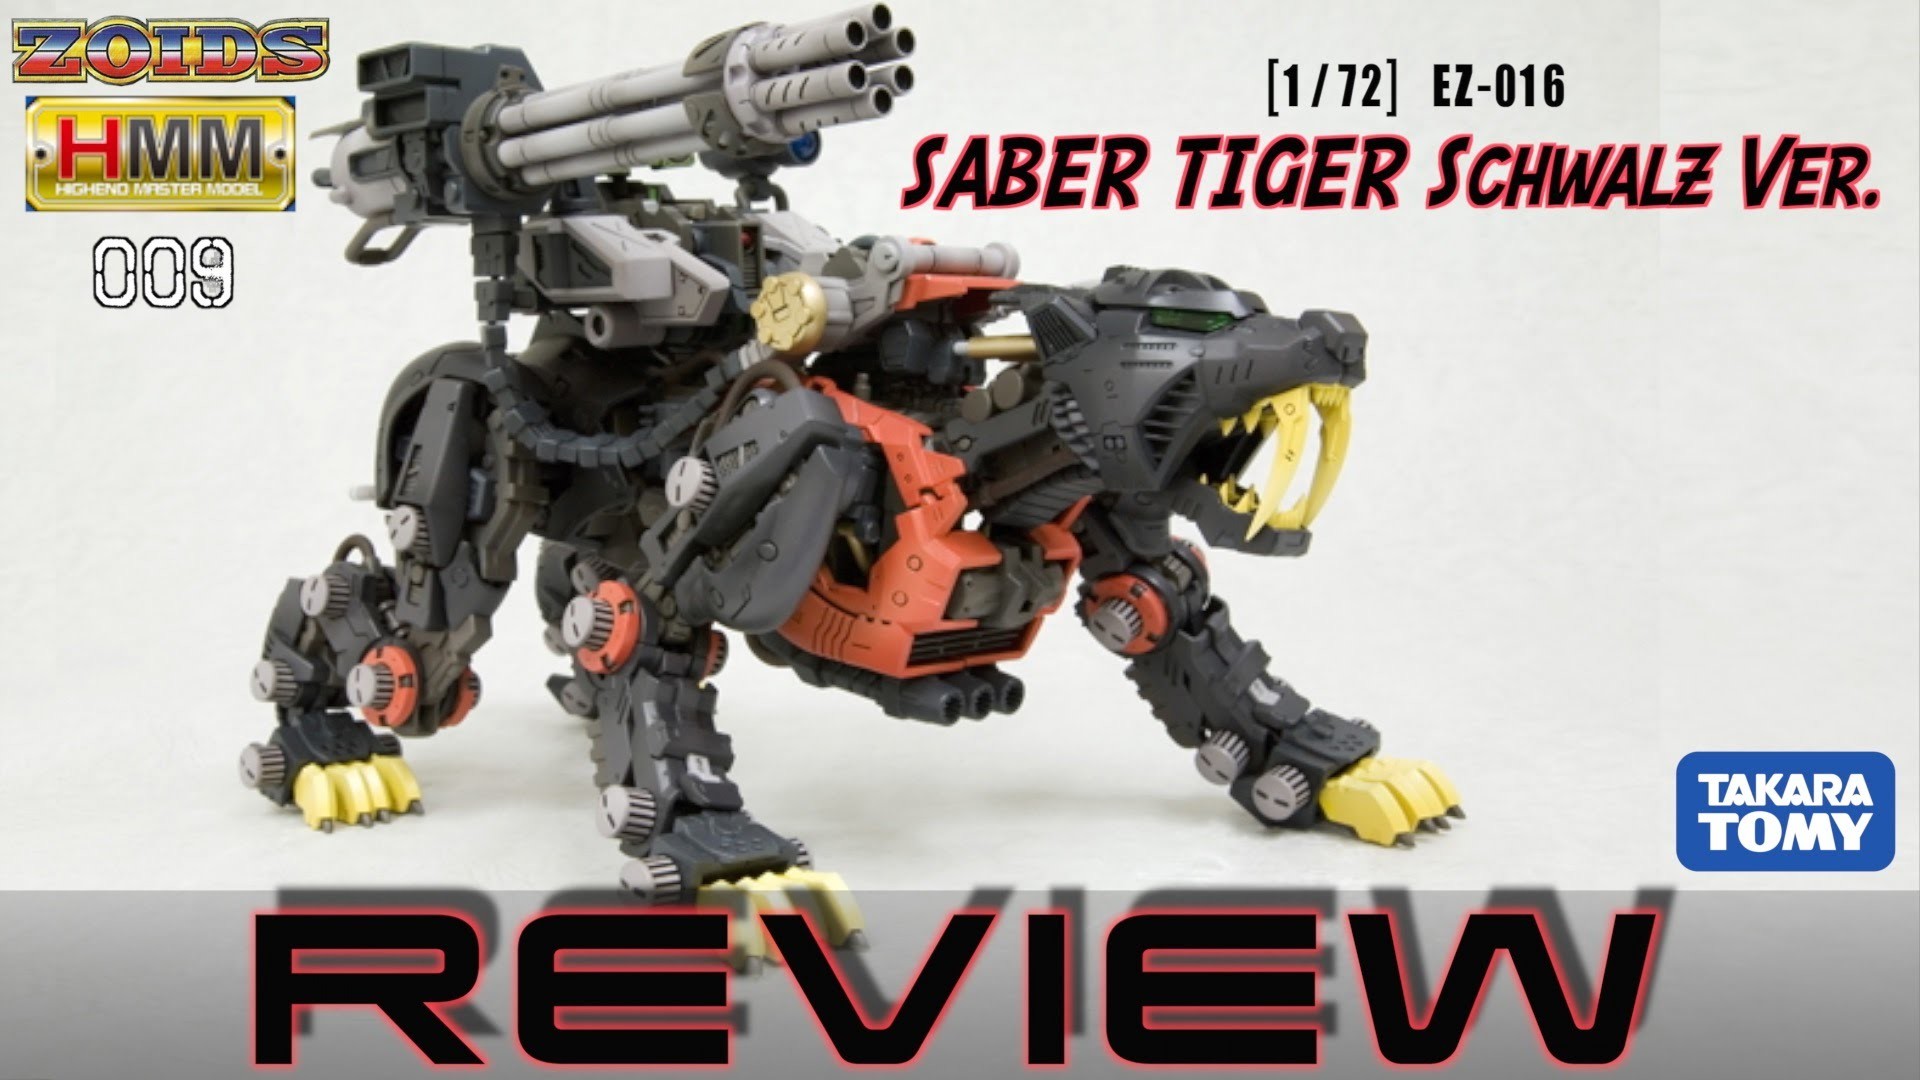 1920x1080 ZOIDS Saber Tiger Schwalz Ver. 1/72 - Review